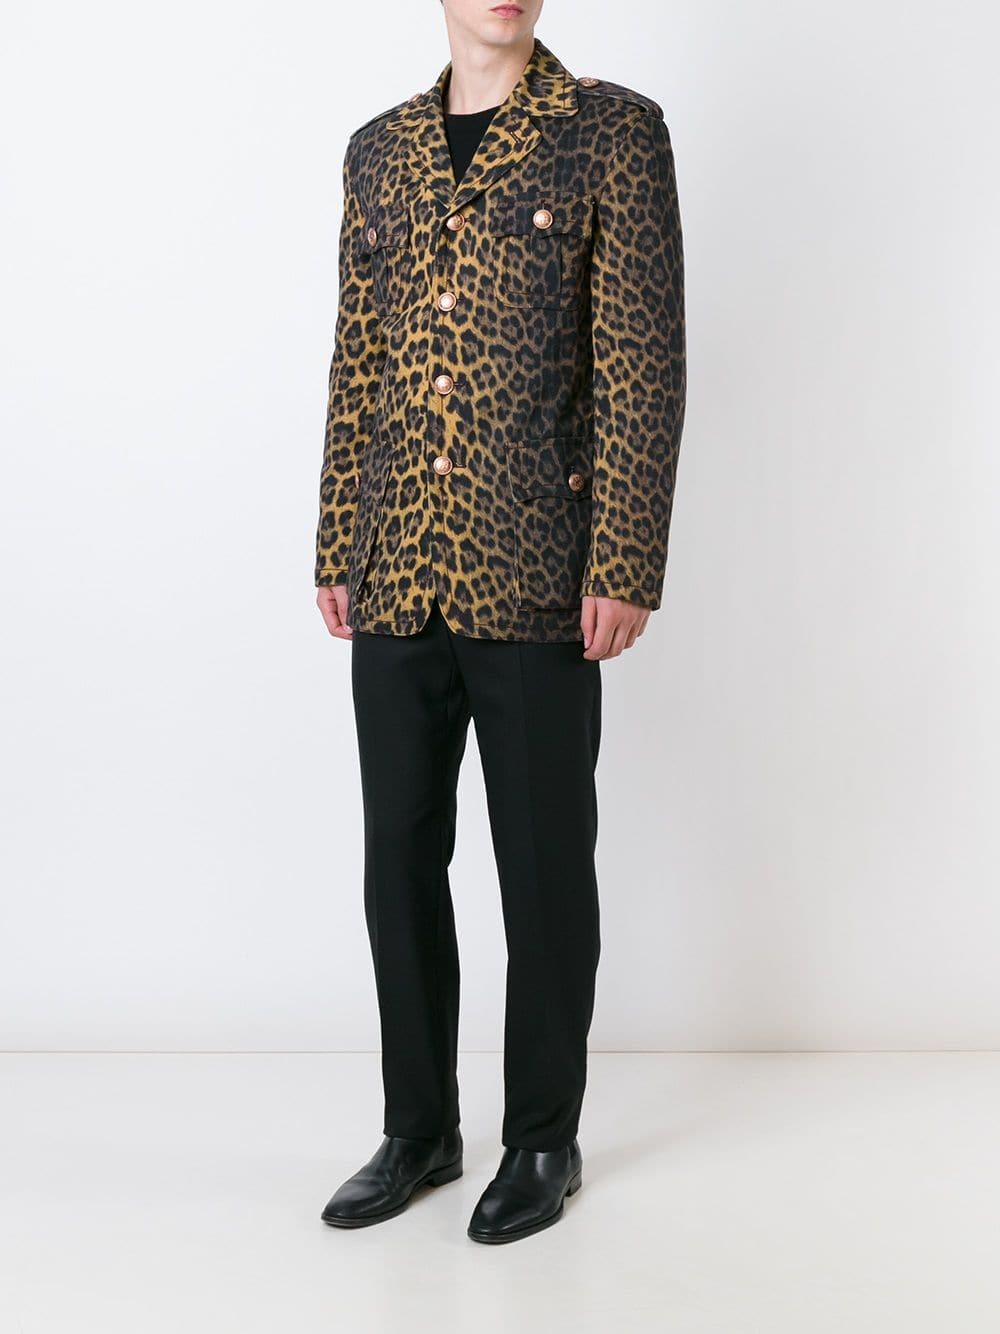 Leopard Blazer / Animal Print Sako